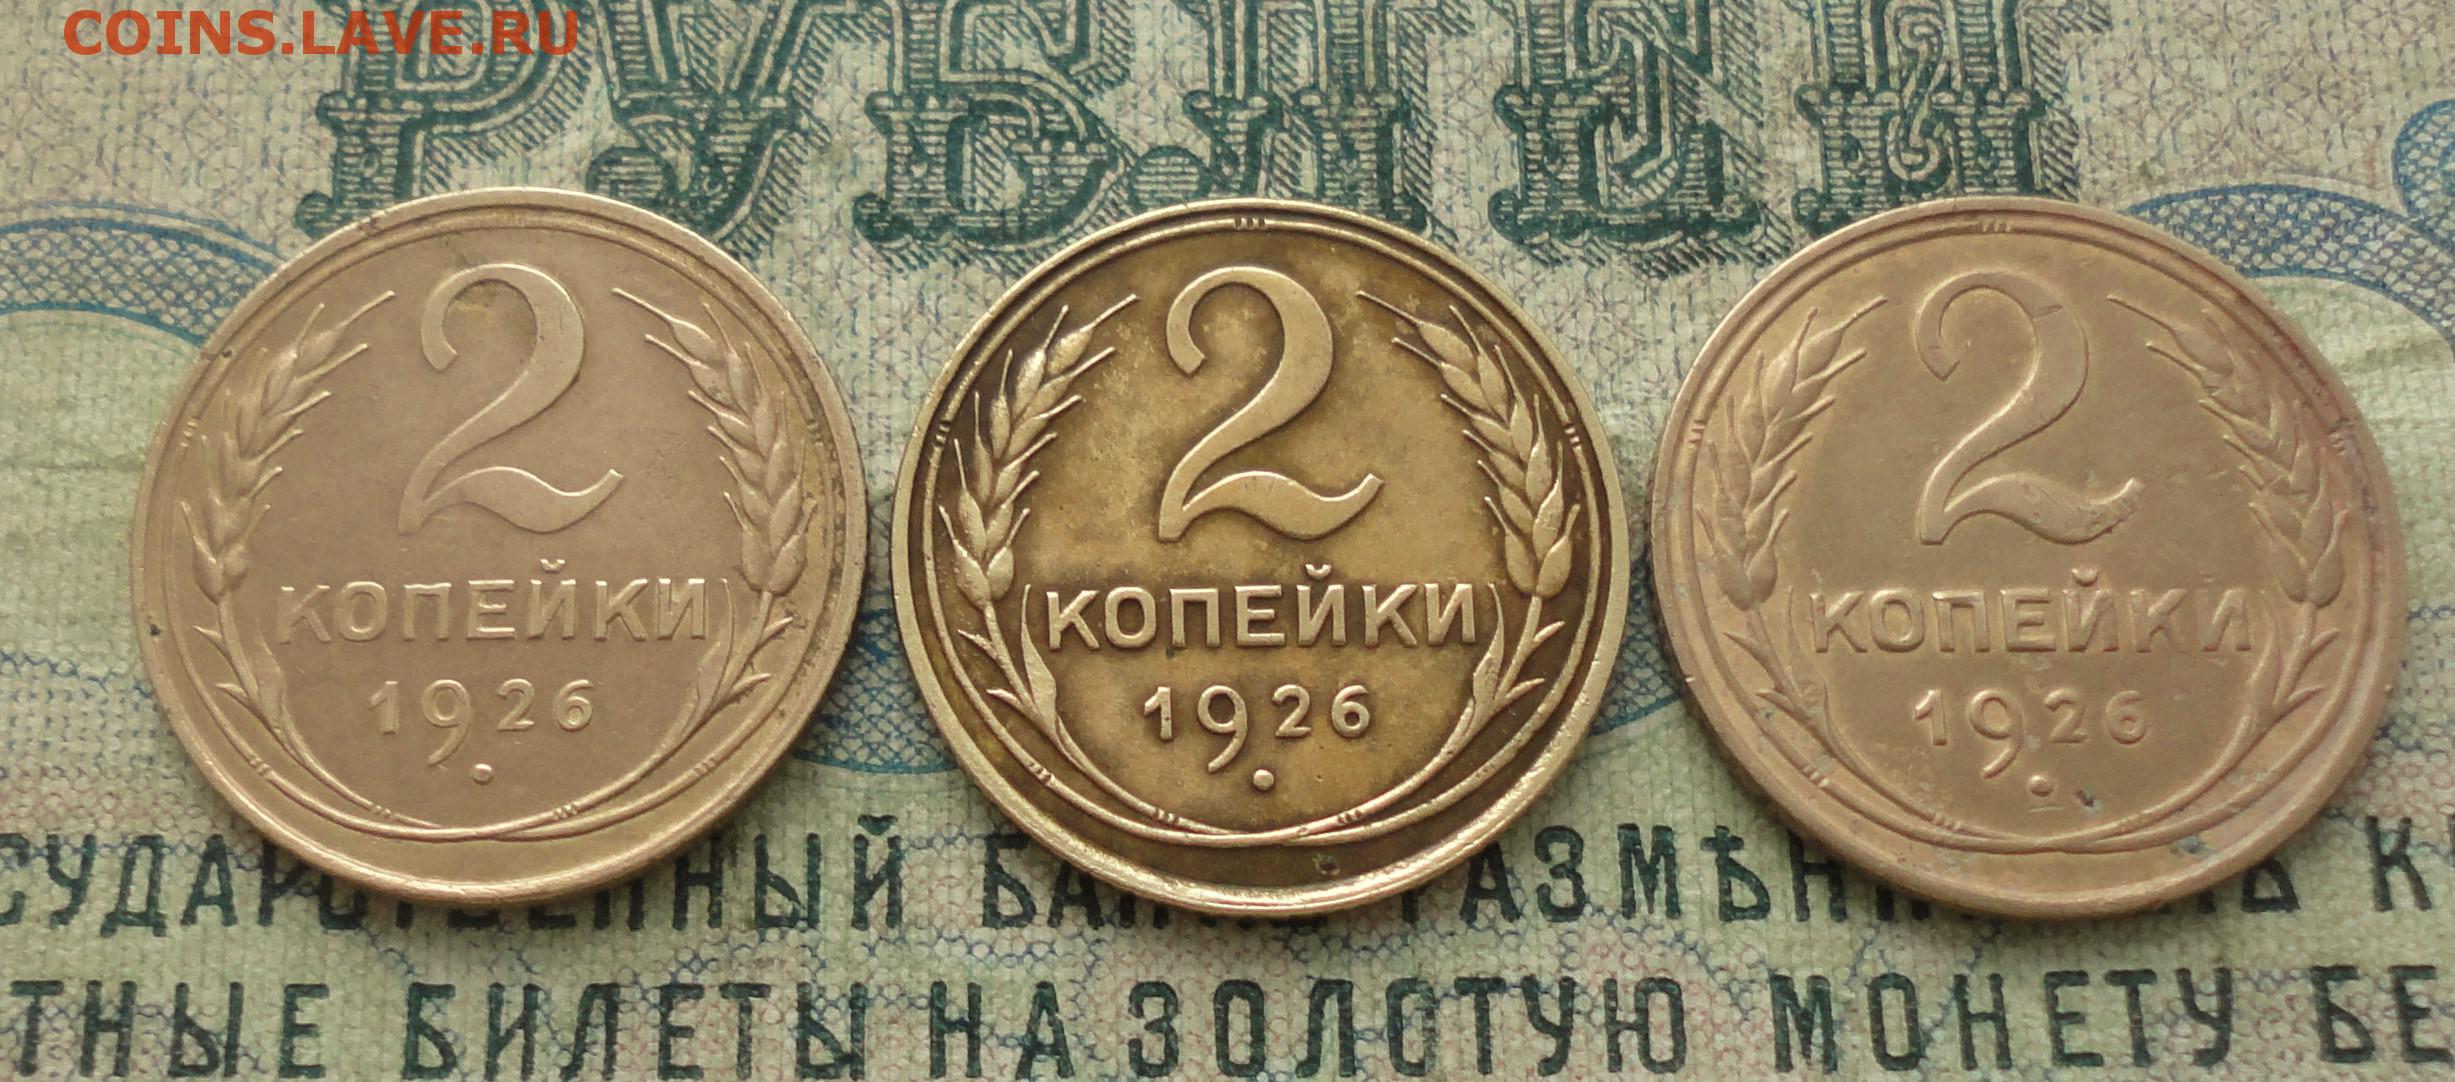 Даны три монеты. 2 Копейки 1926 года. 3 Копейки 1926. 2 Копейки 1926 олх. 2 Копейки 1926 картинки.